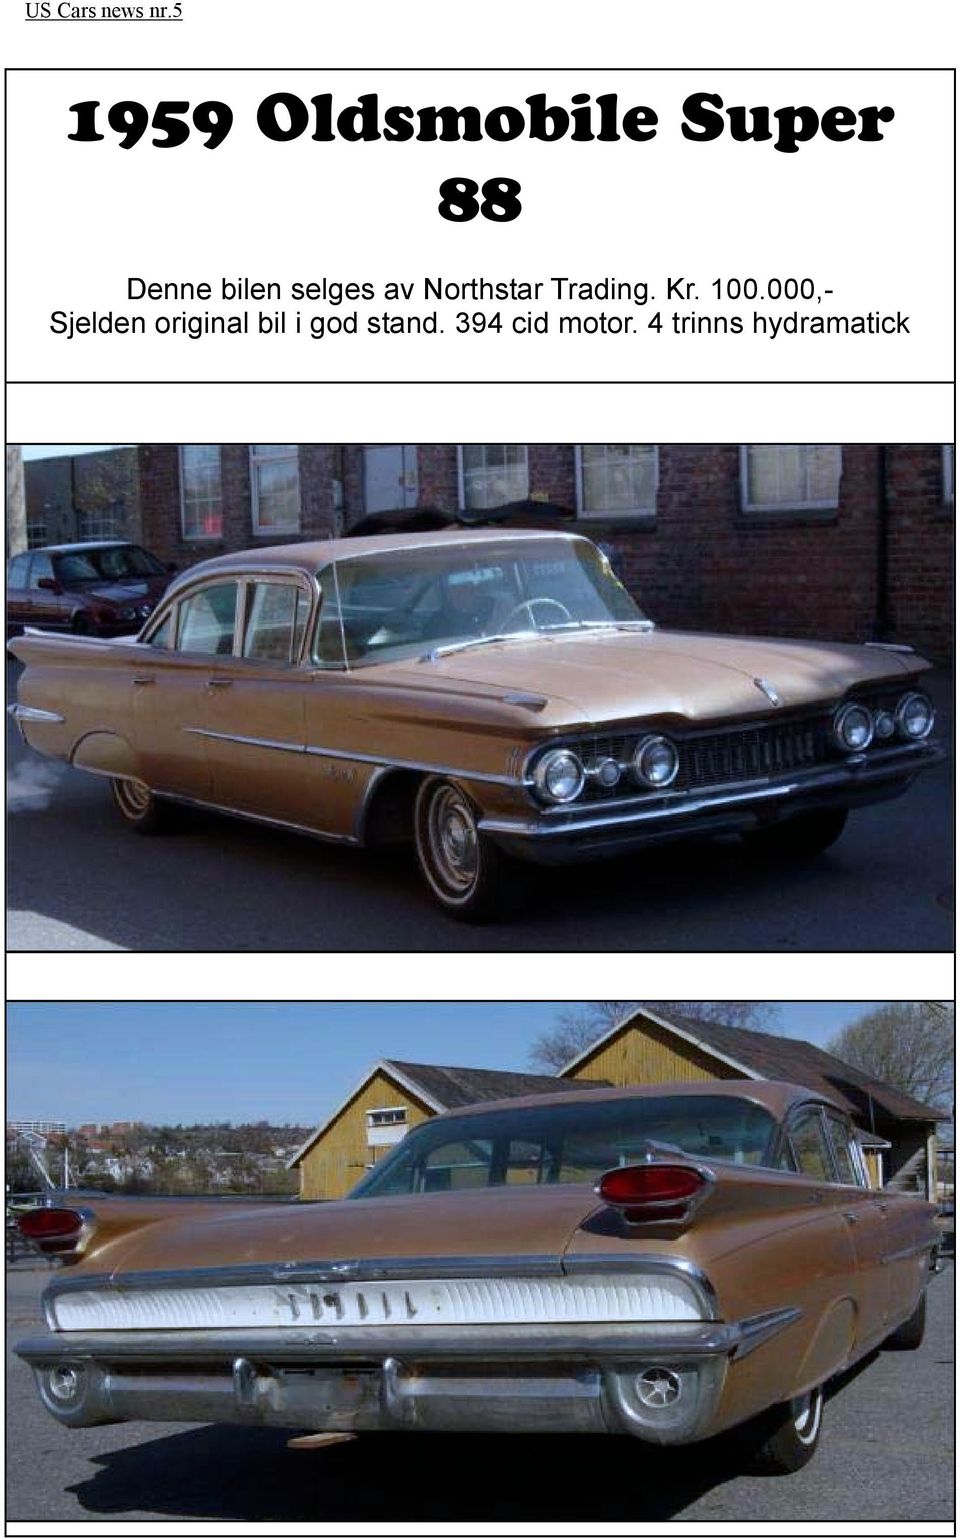 000,- Sjelden original bil i god